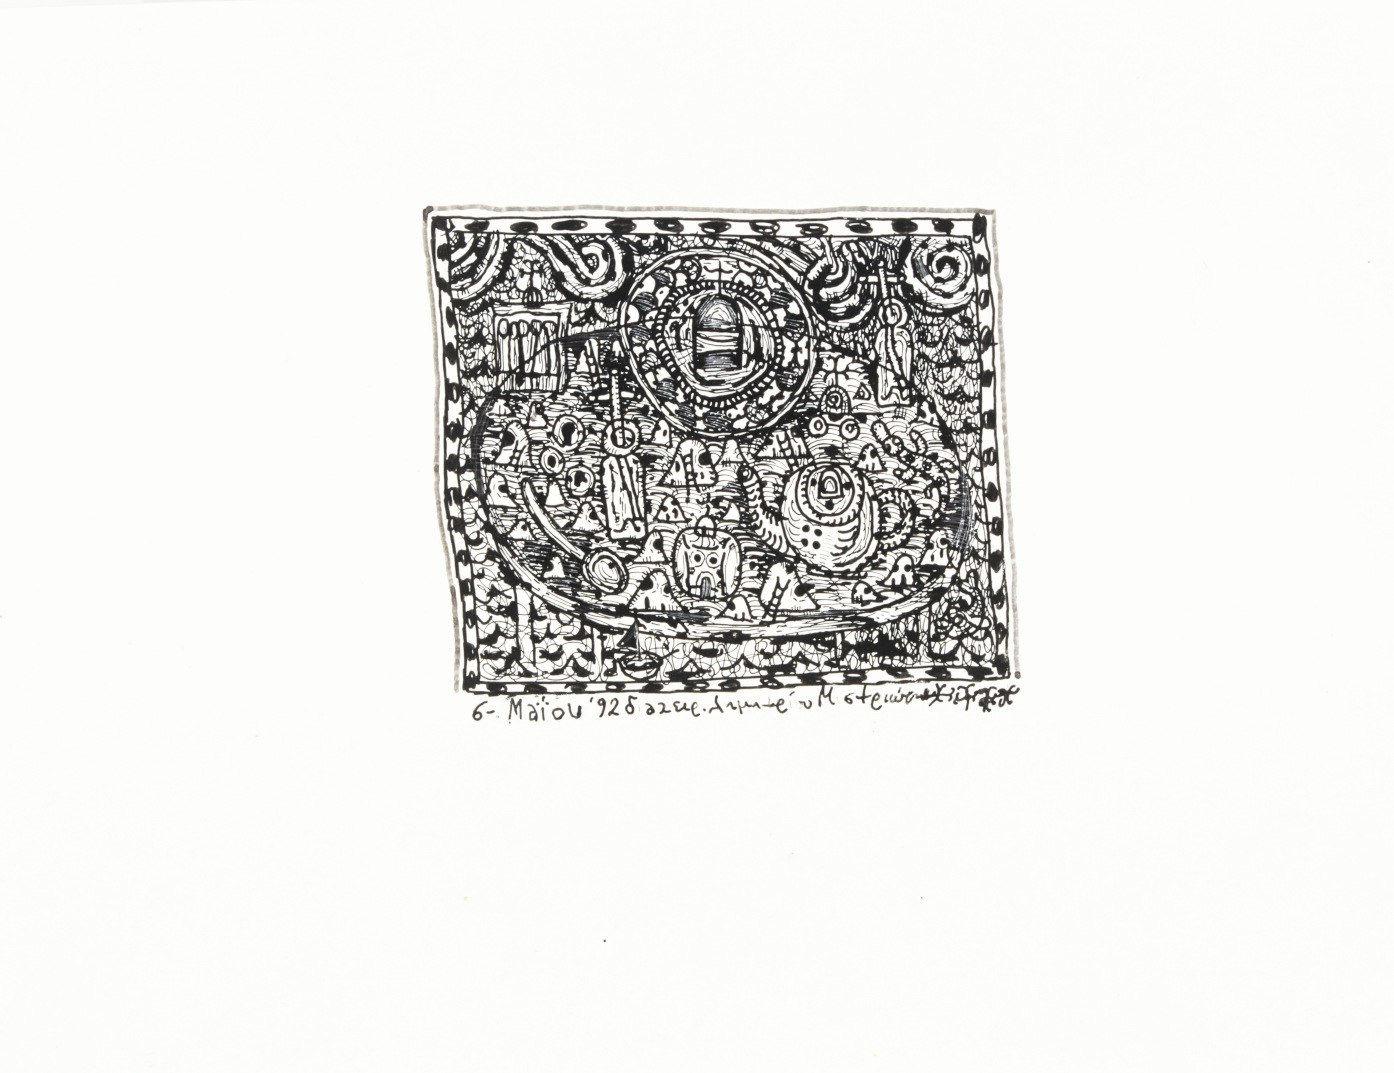 May 6, ‘92, by hand of Dimitrios Mistriotis. Ink on paper , 32 x 24 (cm)